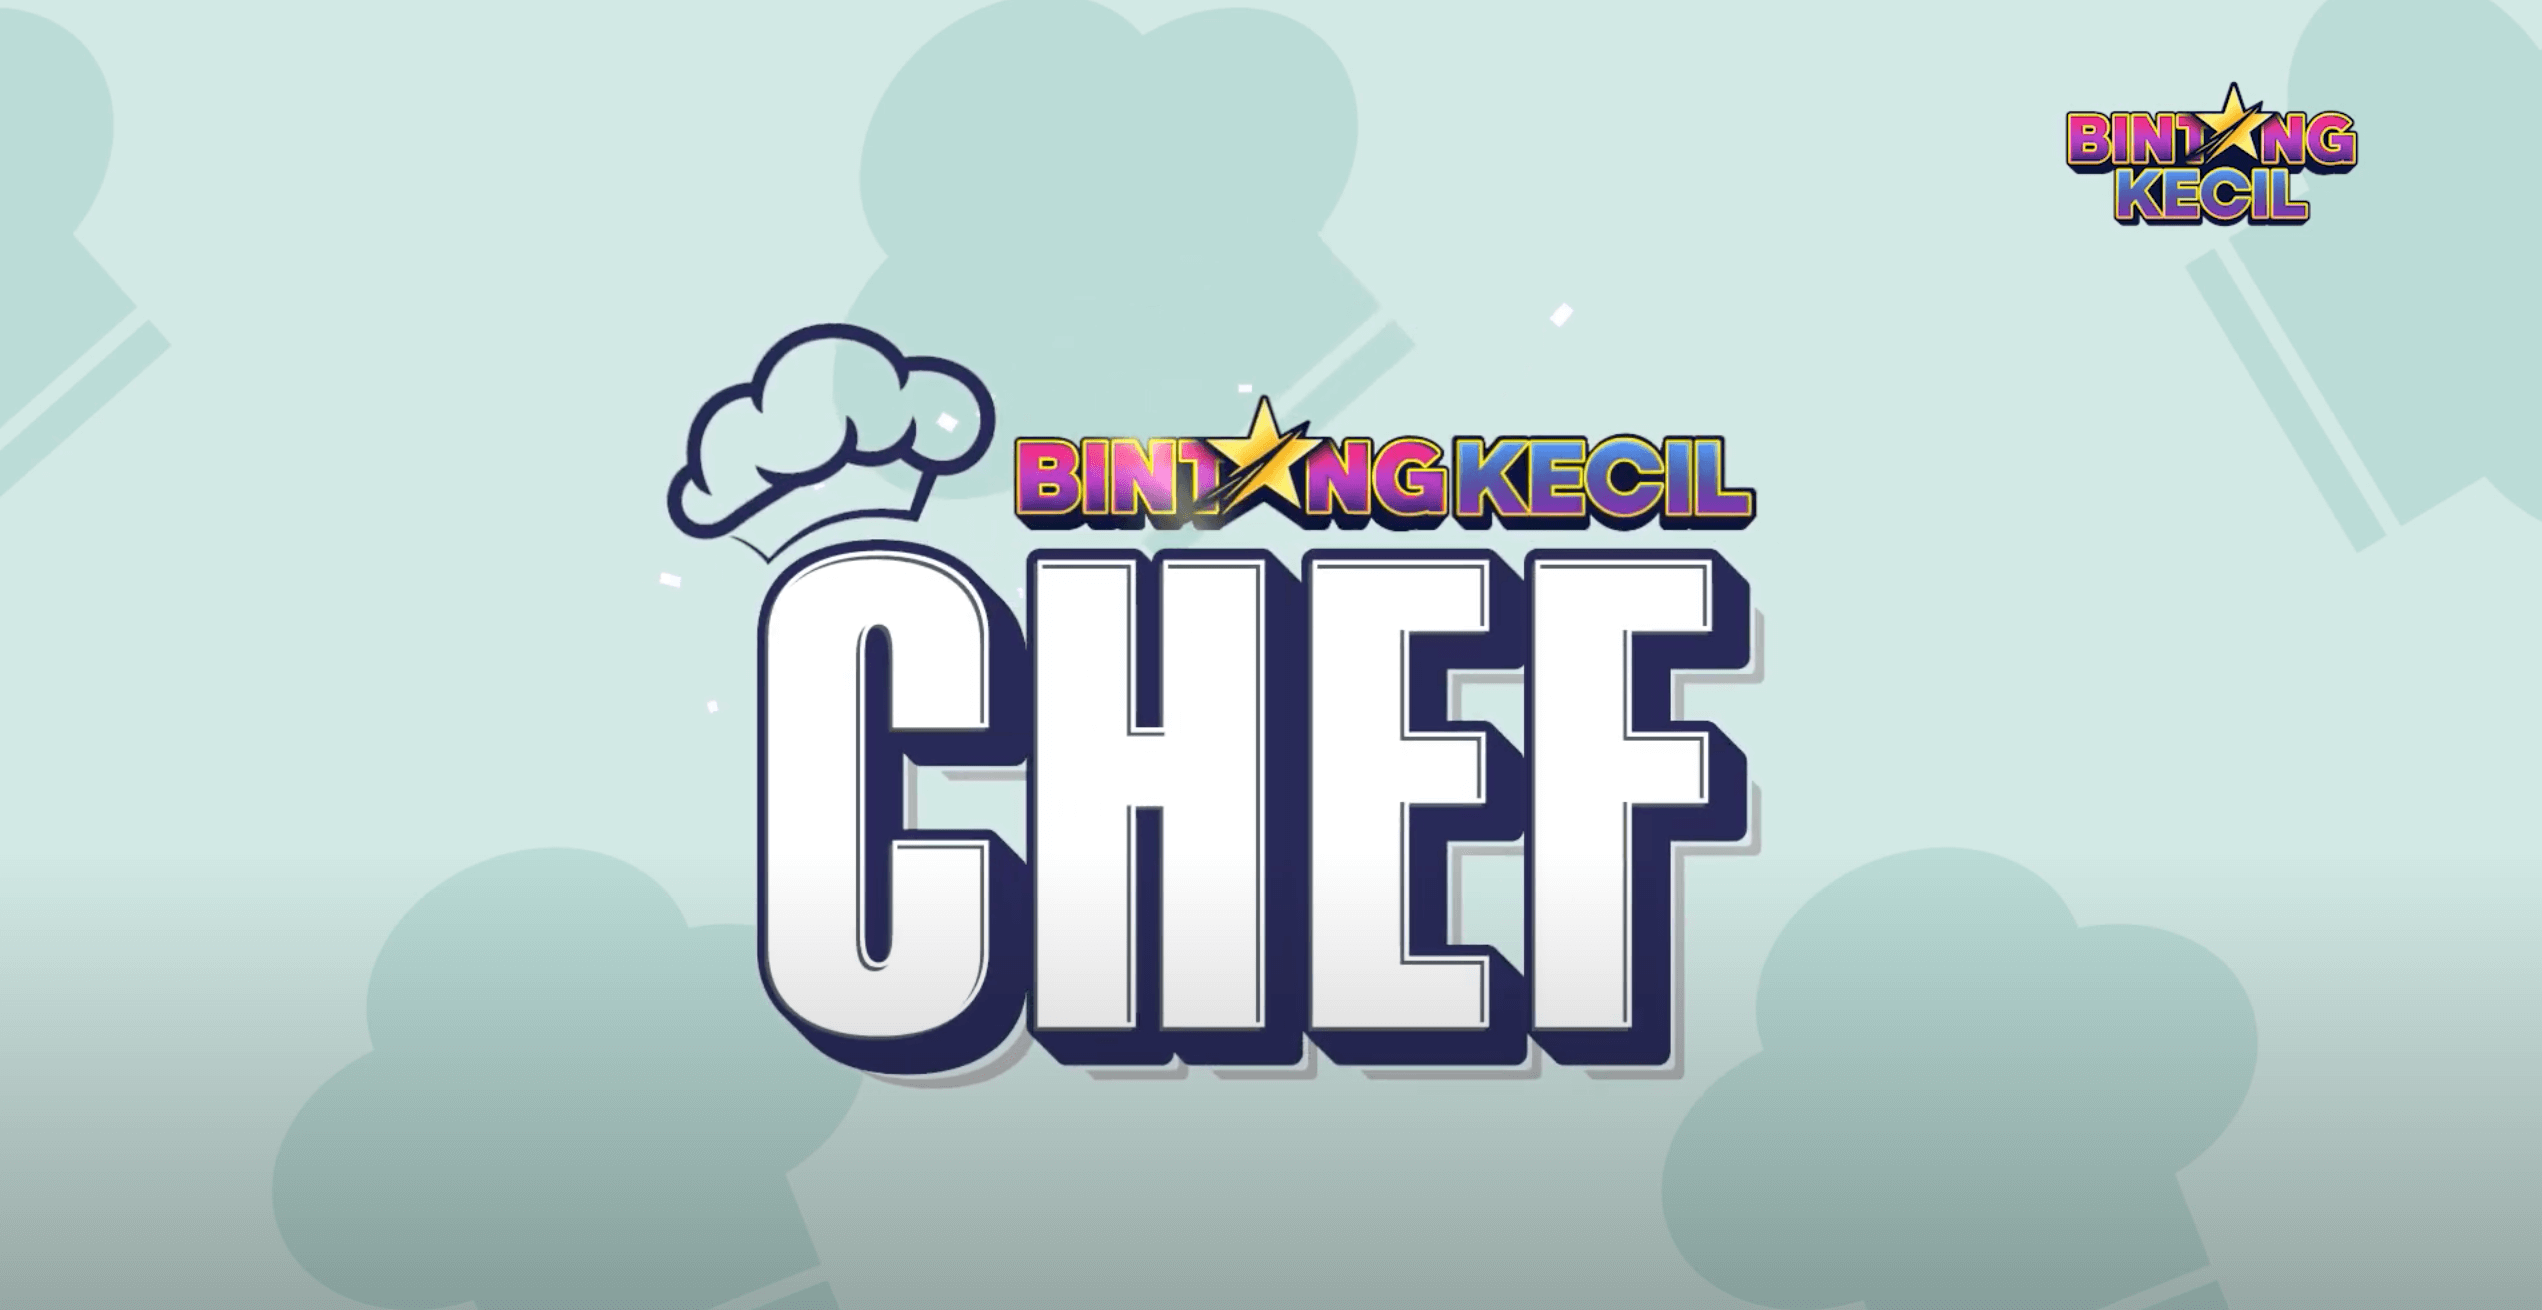 BK Chef Cilik